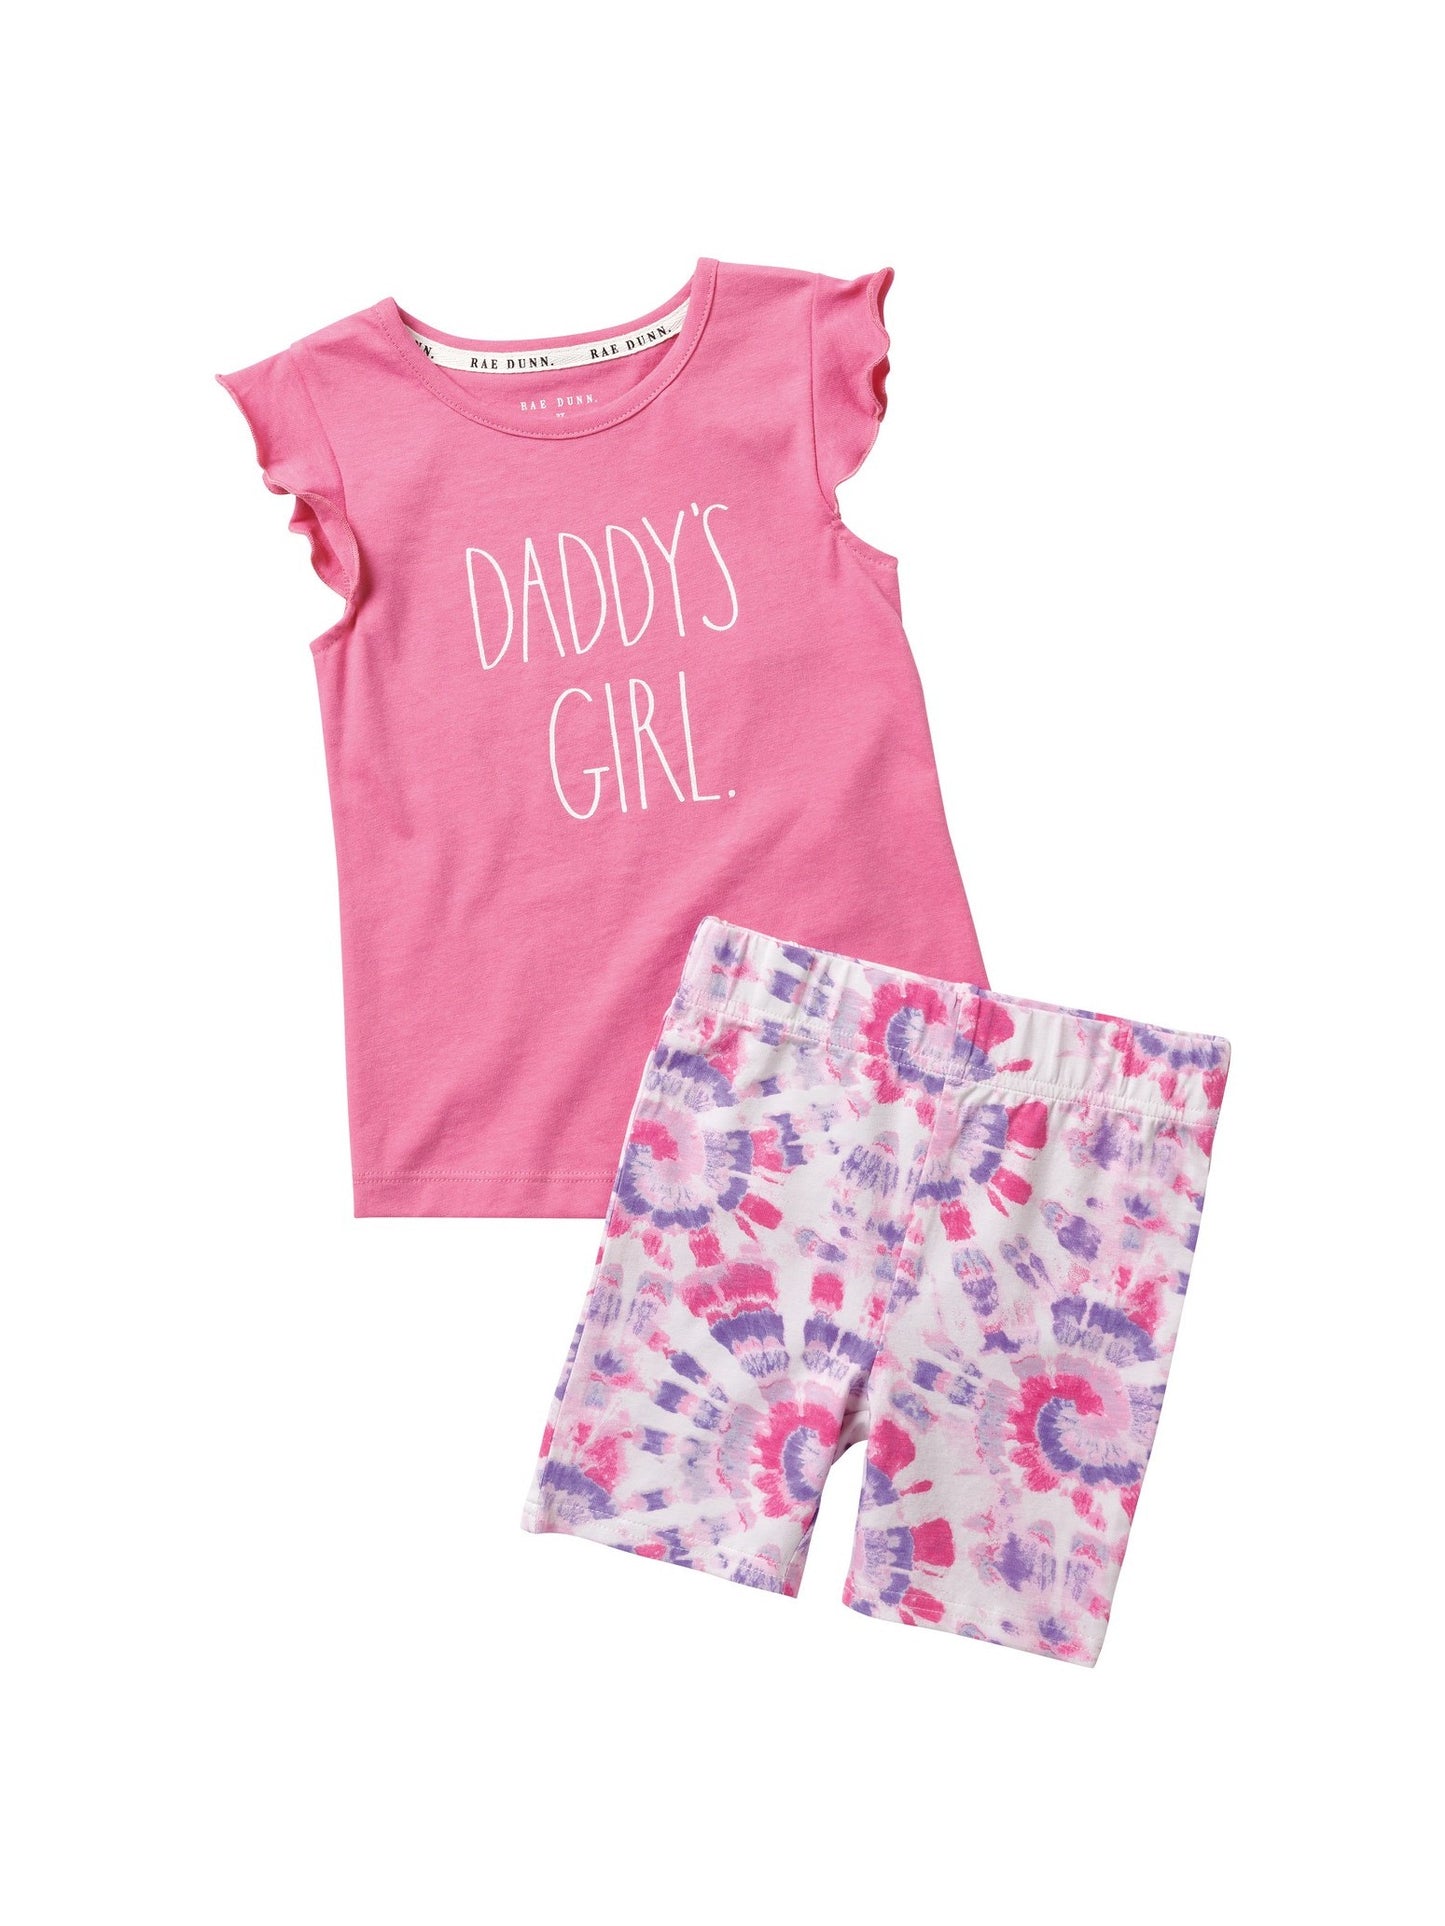 Girls "DADDY'S GIRL" Ruffle Sleeve Tank and Elastic Waistband Short Set - Rae Dunn Wear - G A Shorts Set